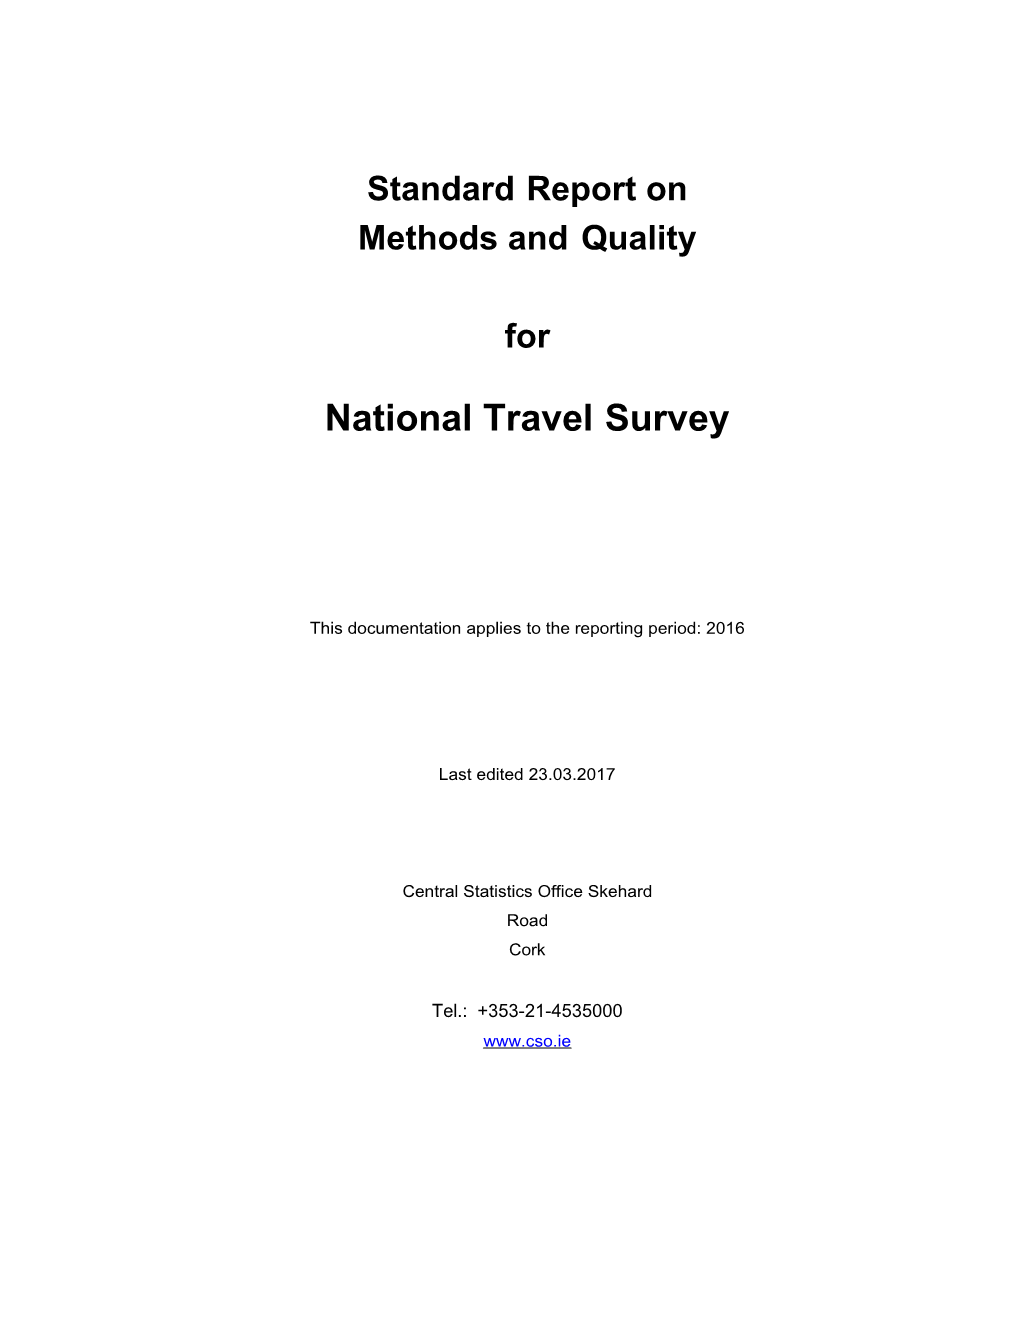 Quality Report - National Travel Survey